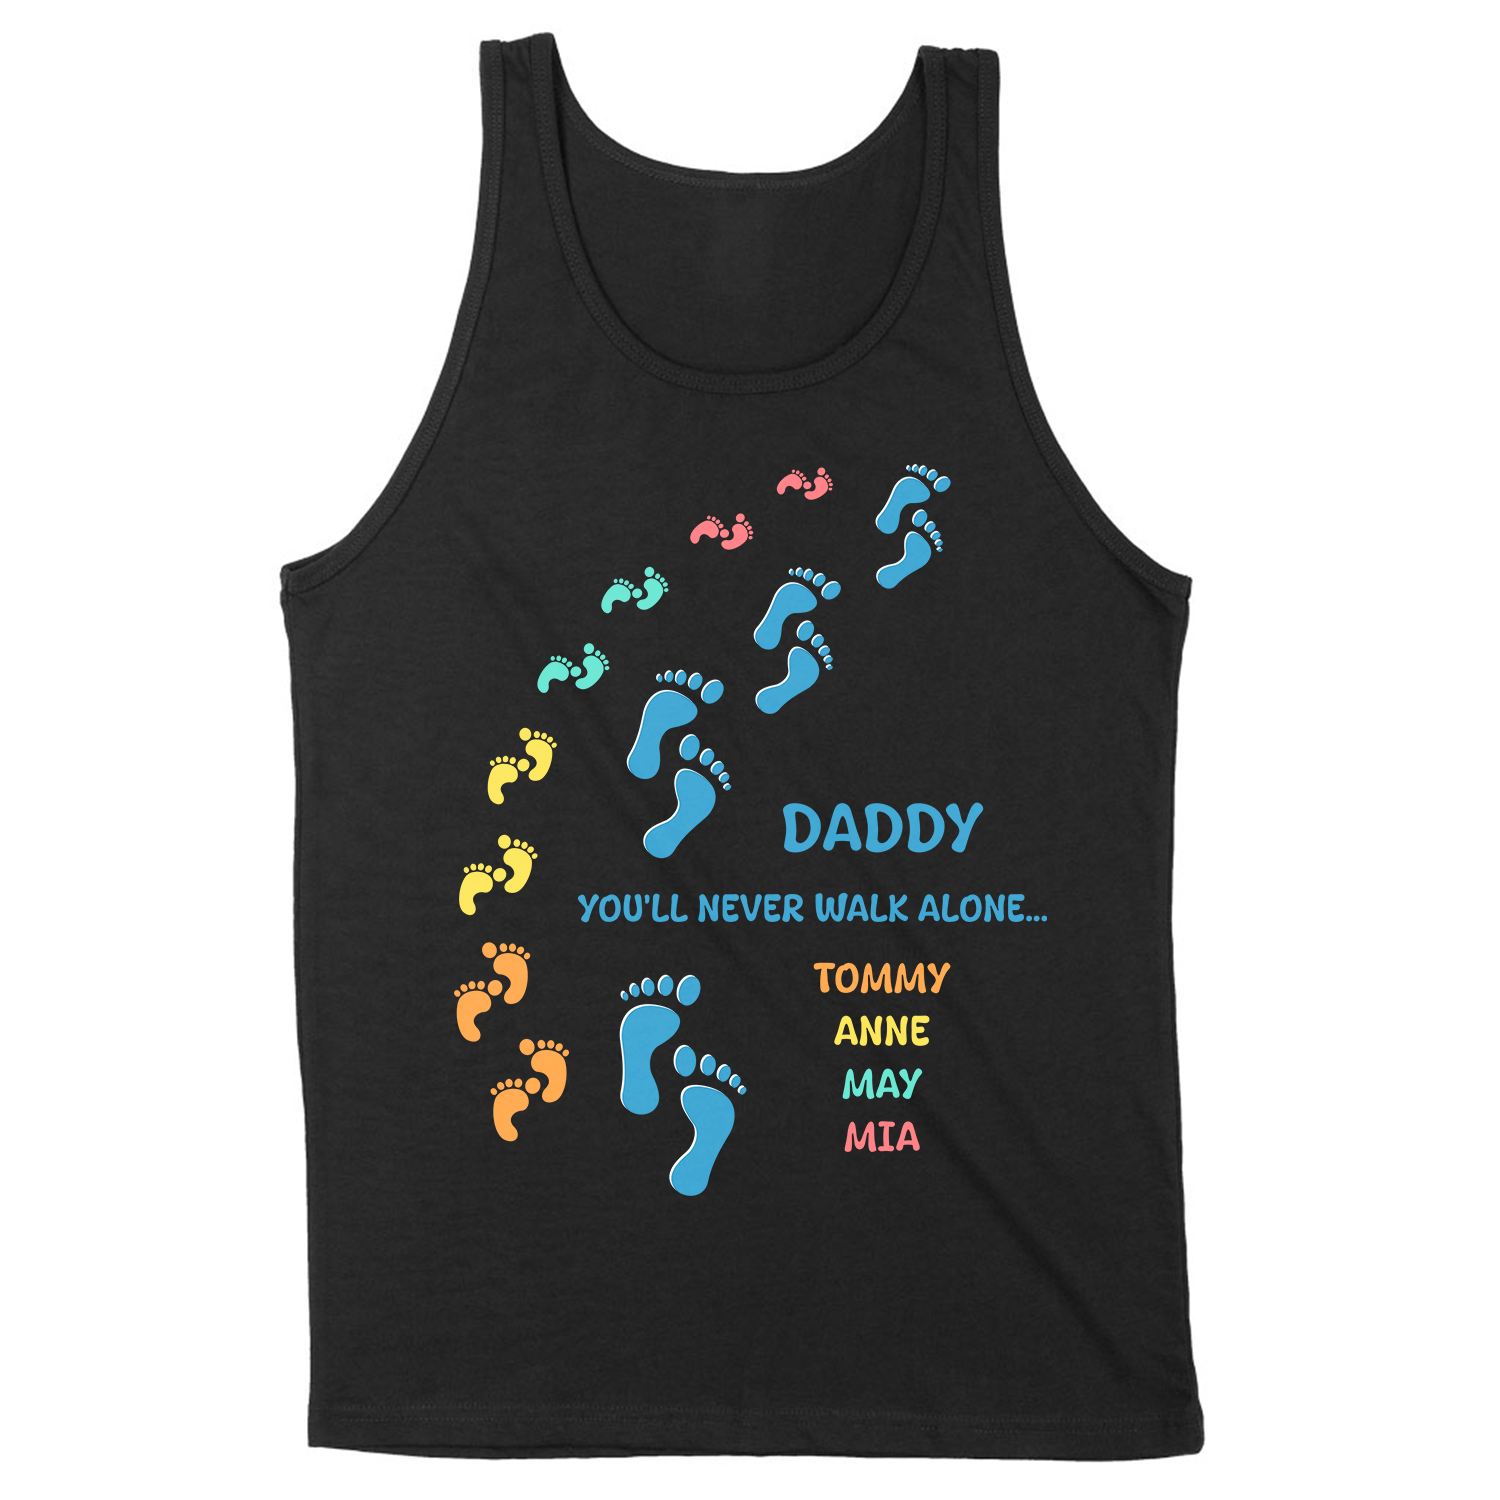 Daddy You'll Never Walk Alone shirt